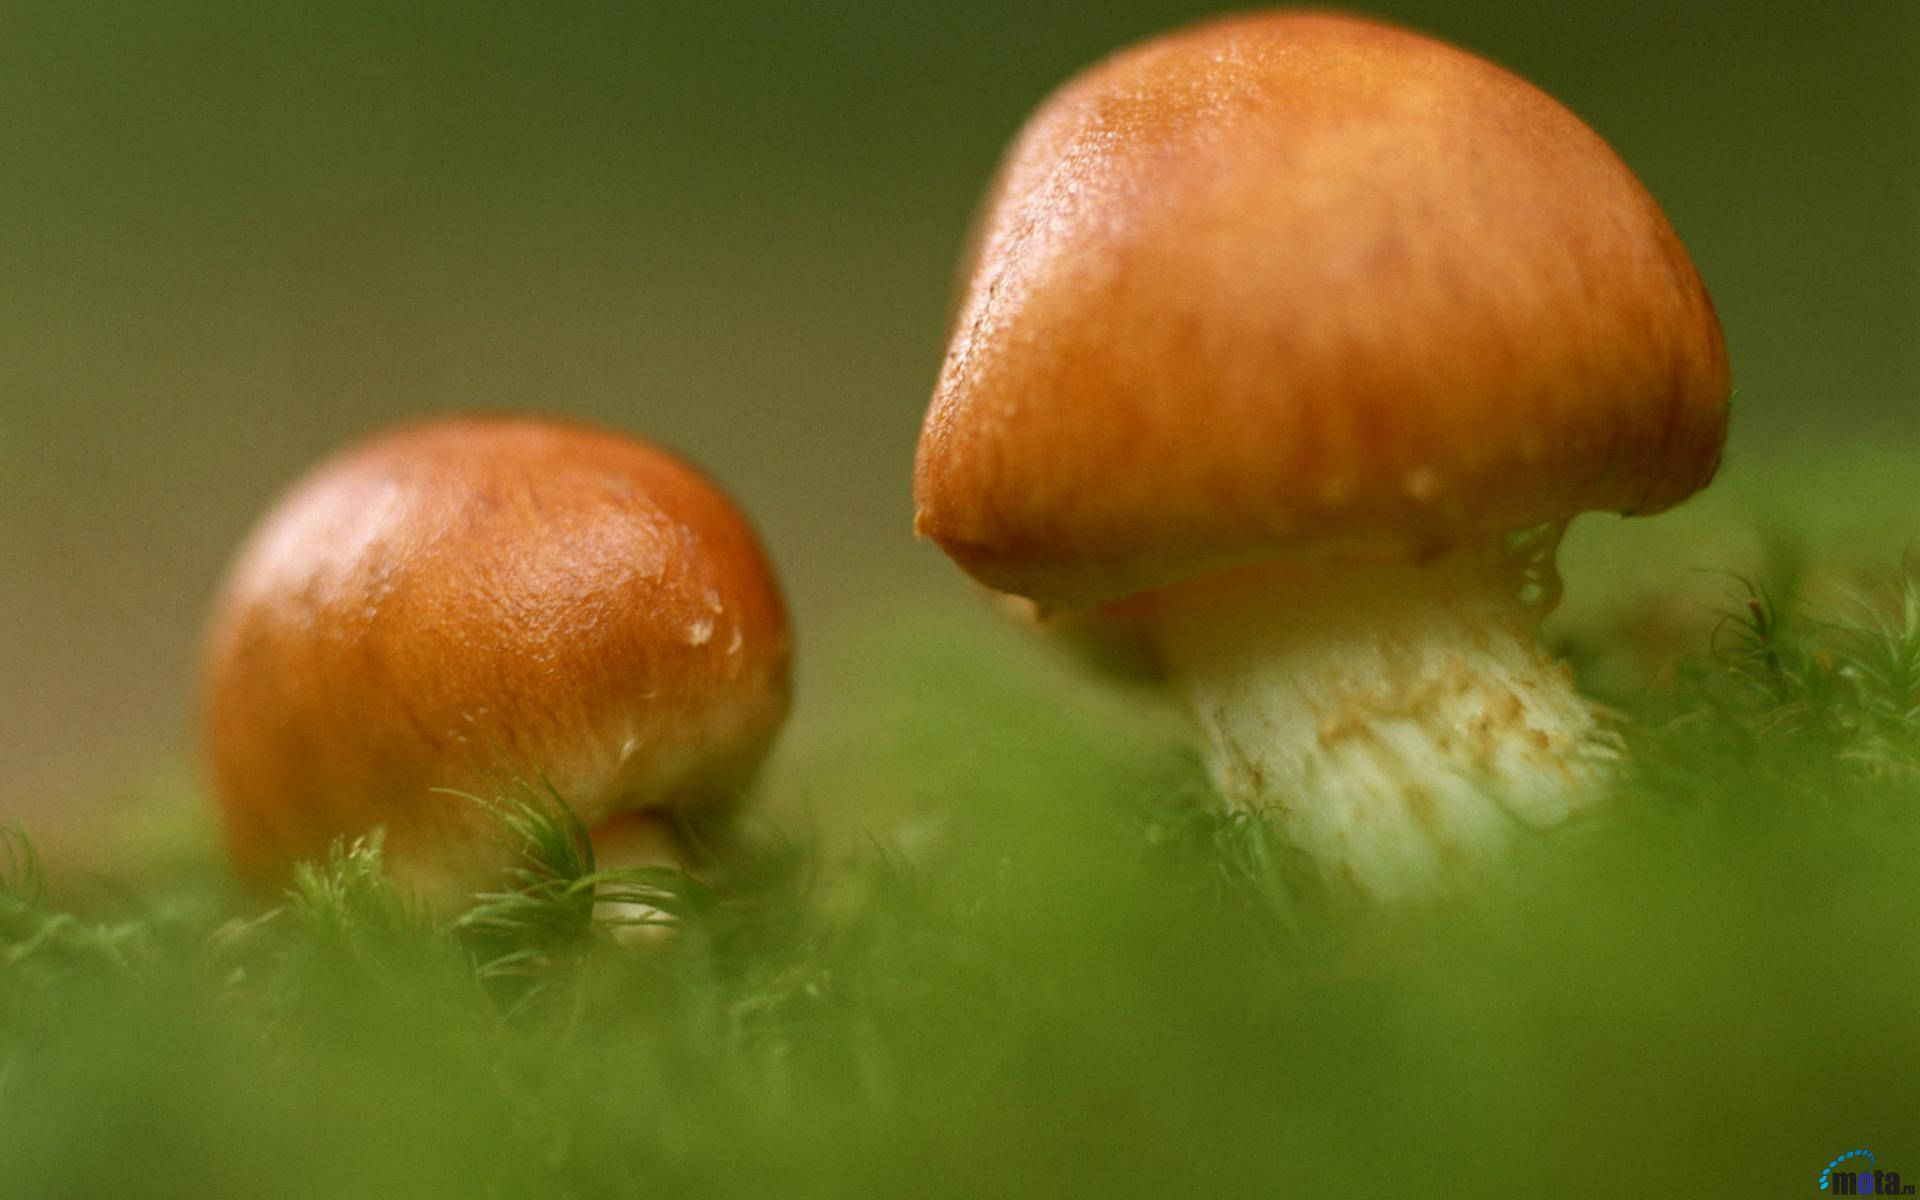 Two Cute Mushrooms Growing Wallpaper